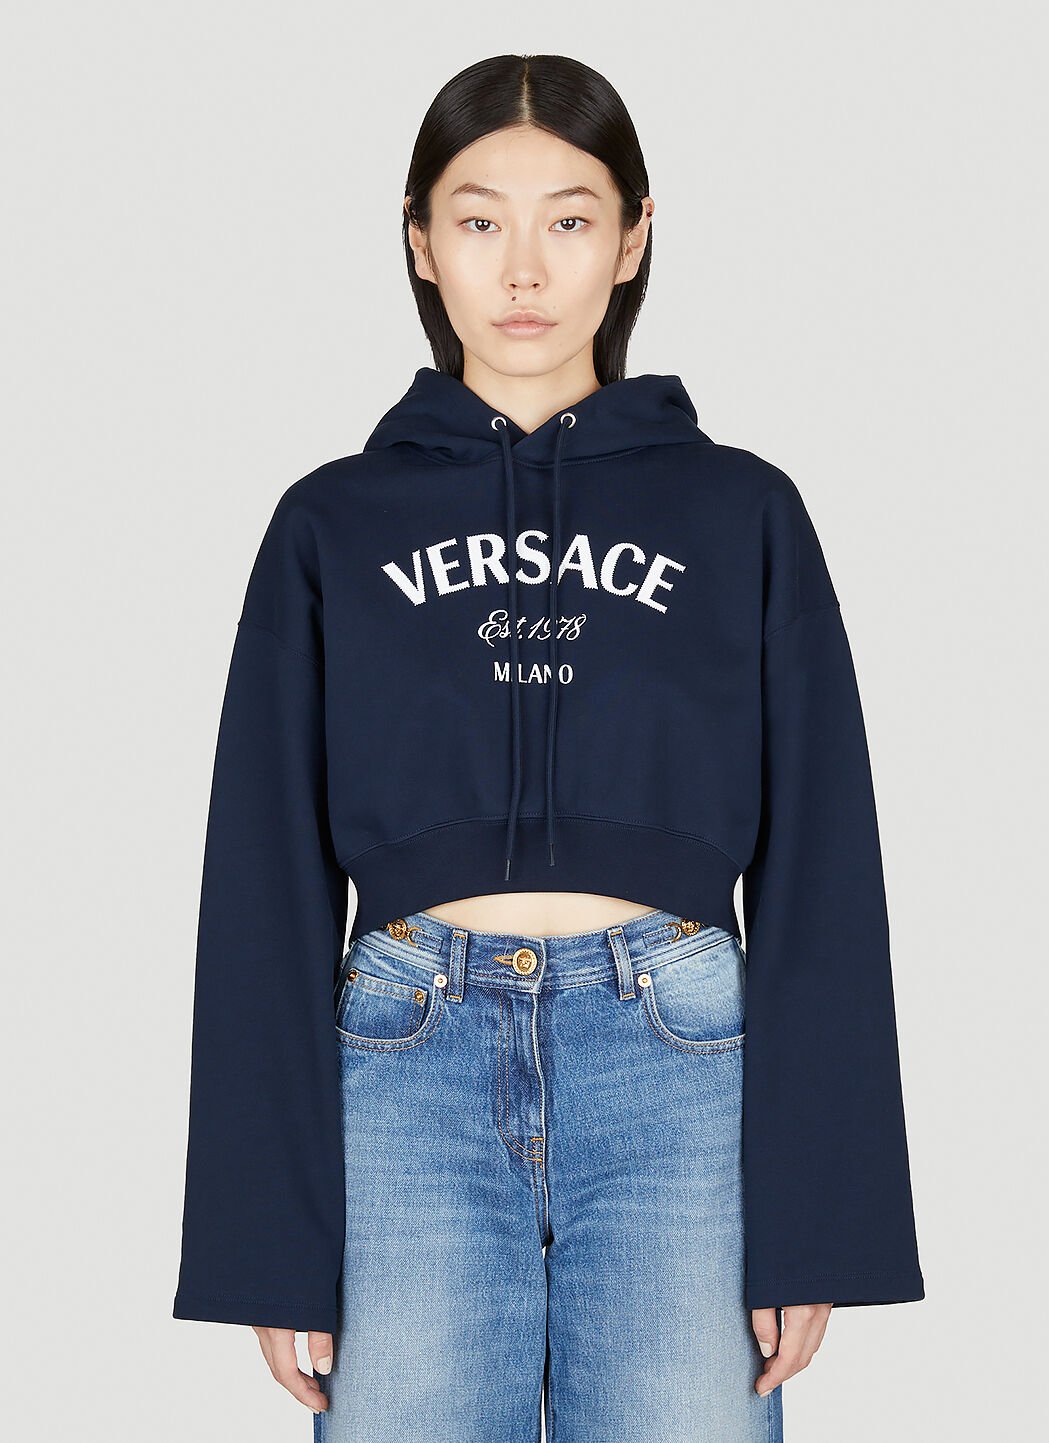 Versace Milano Stamp Crop Hooded Sweatshirt Blue ver0255008